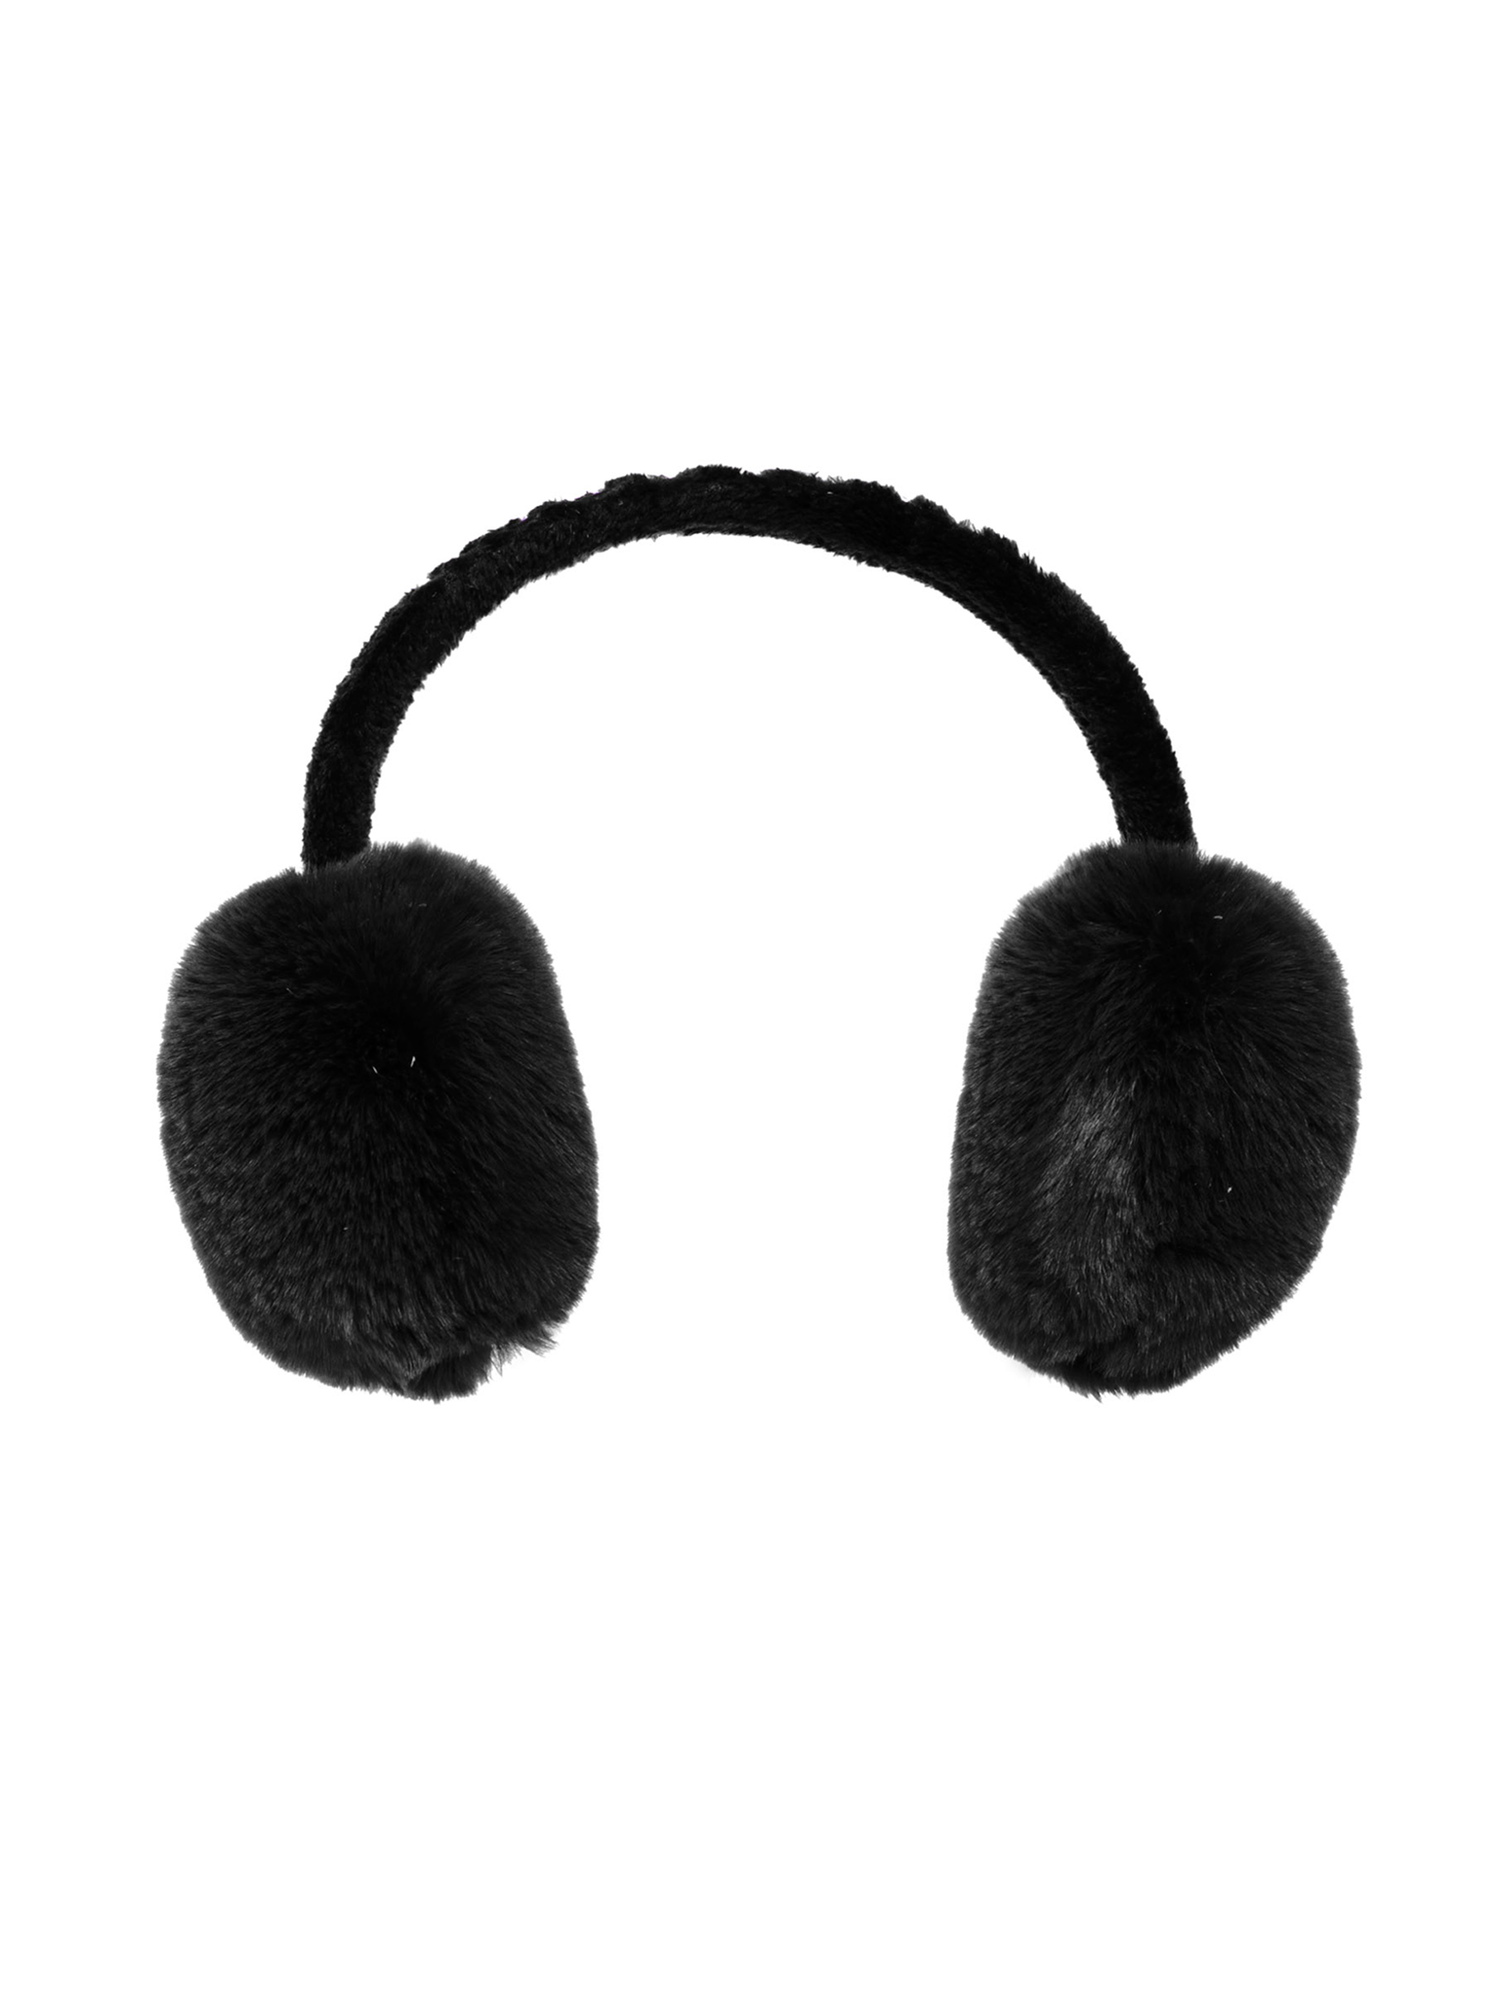 Cache oreilles fourrure blanc - Fur earmuffs white par Barts : Headict